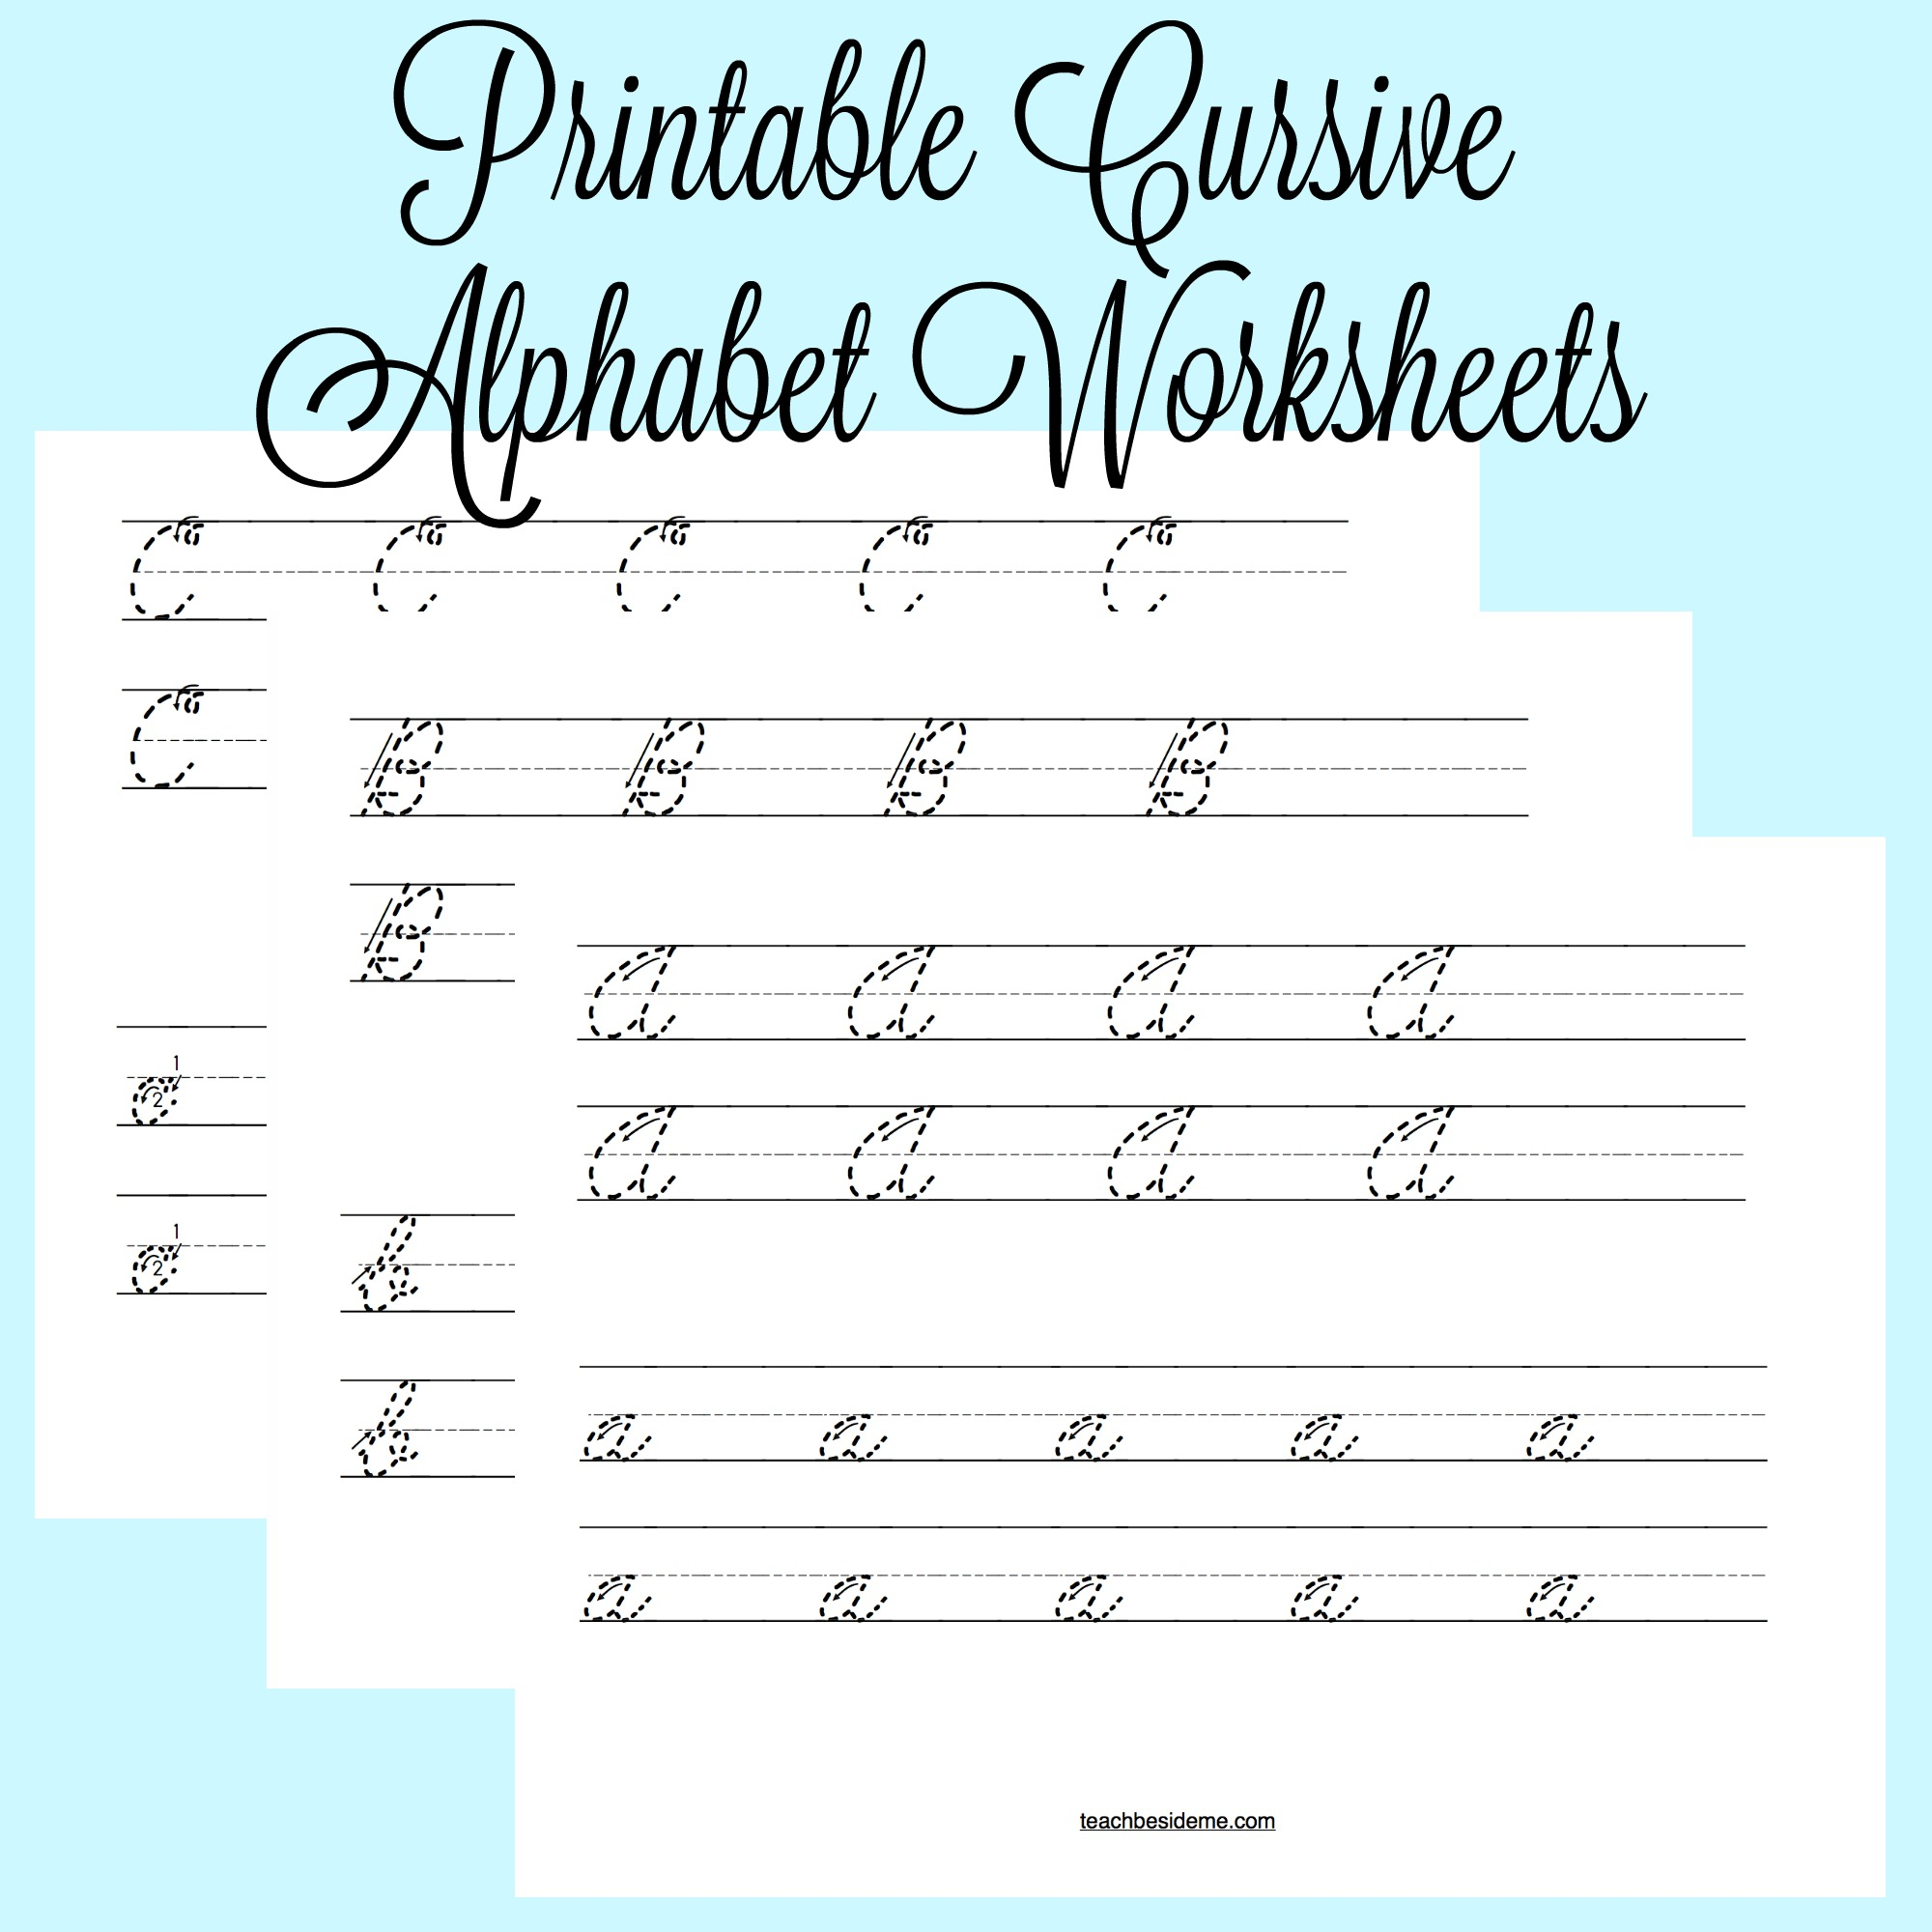 Cursive Writing Chart Printable Worksheets  alyssamilanoblog smileav